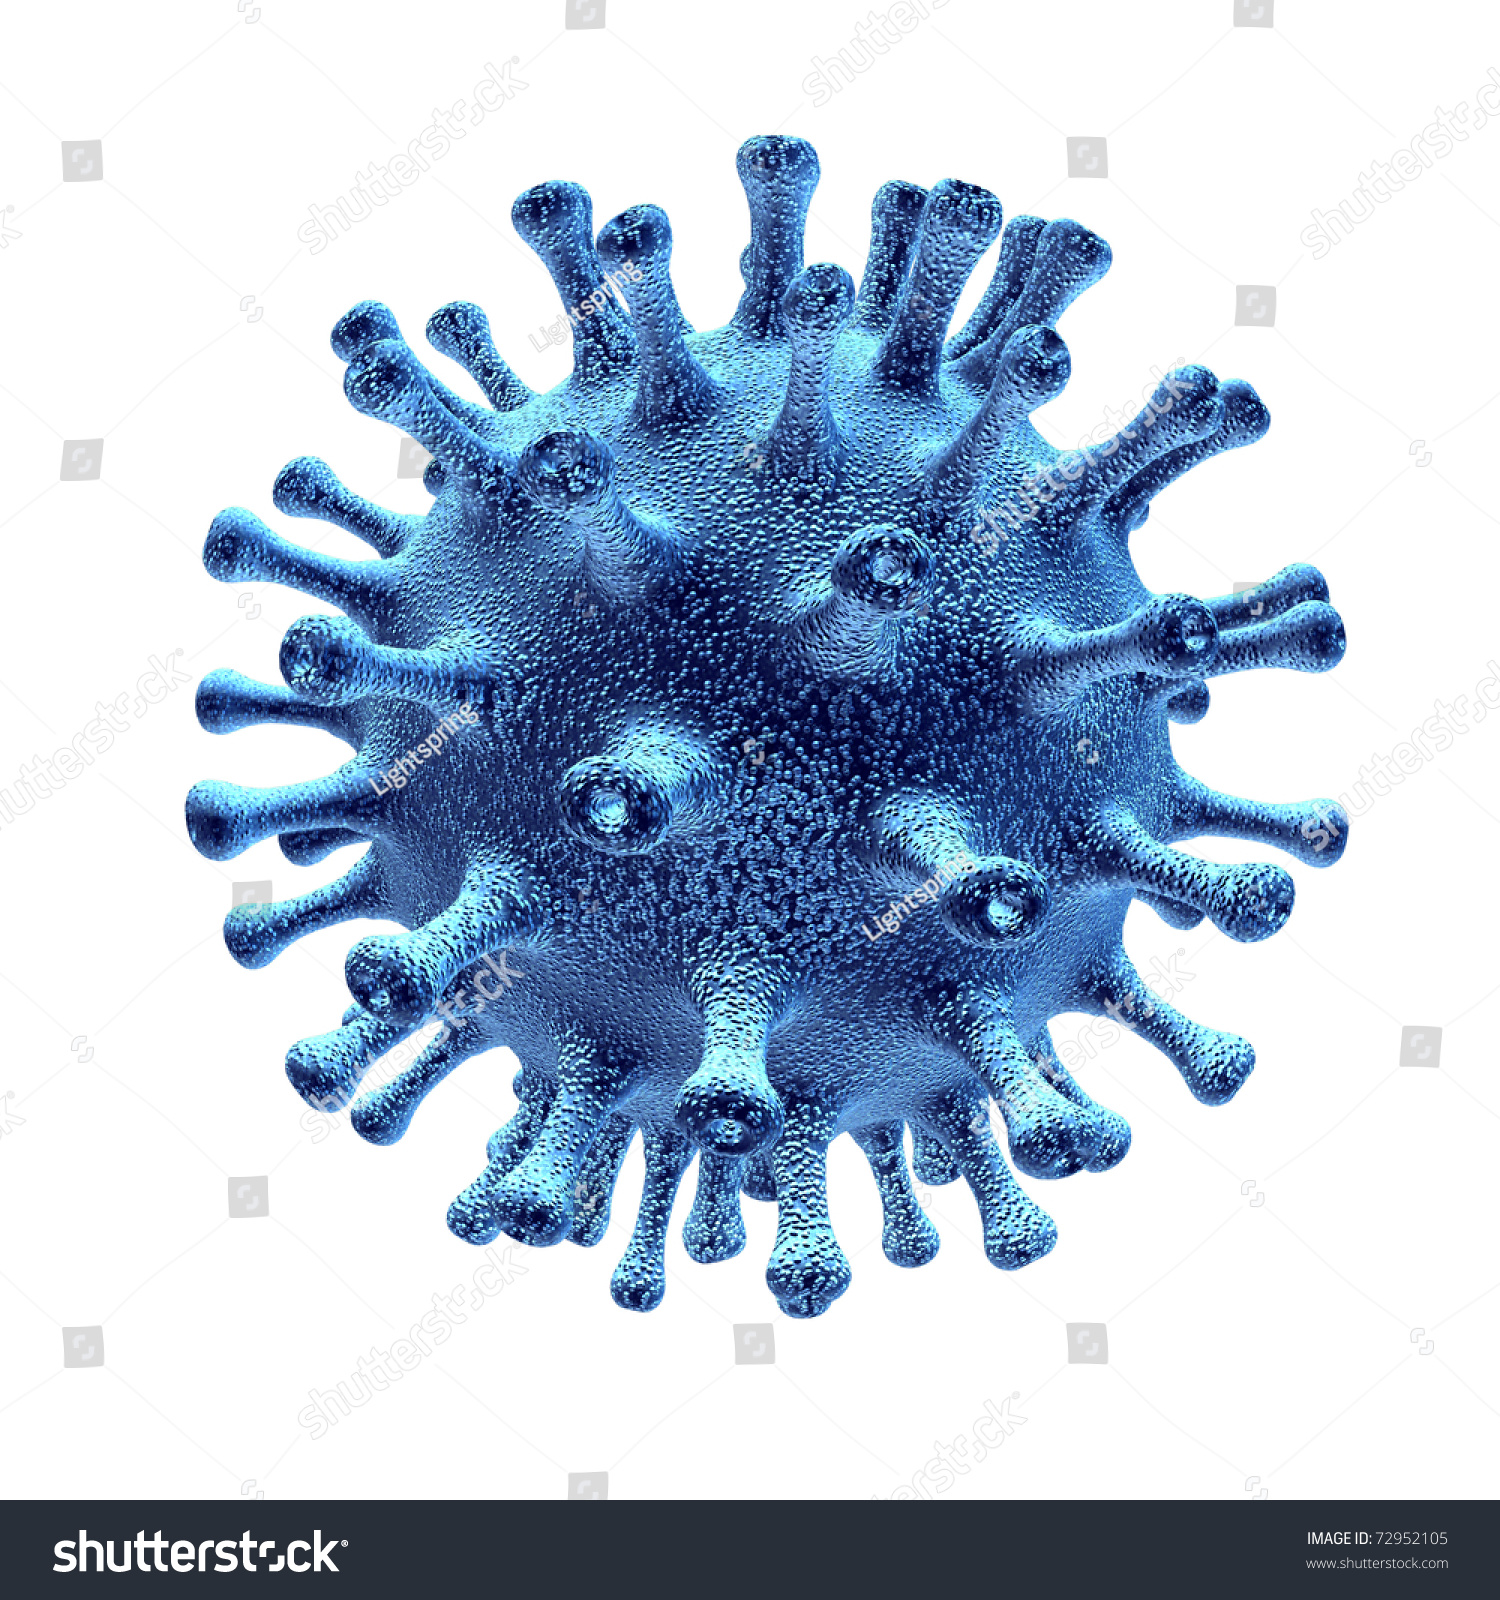 Virus Bacterium Medical Symbol Represented By Stock Illustration ...